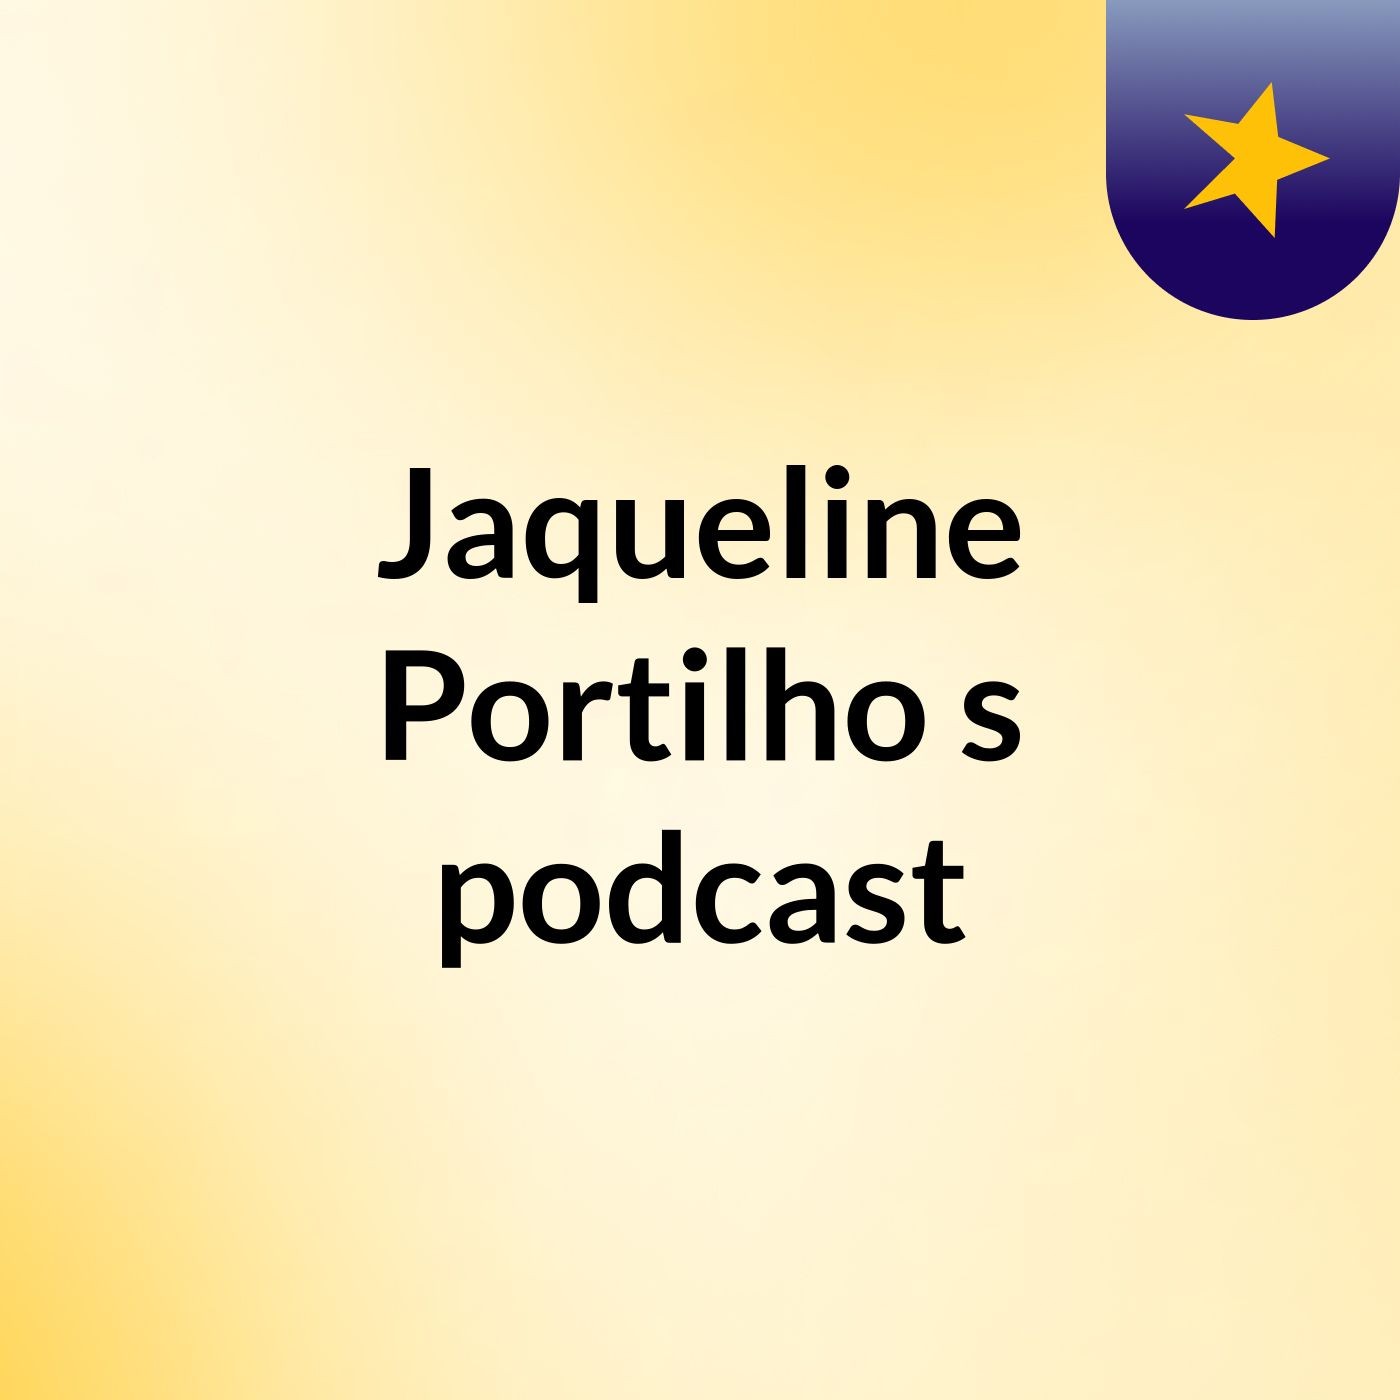 Jaqueline Portilho's podcast